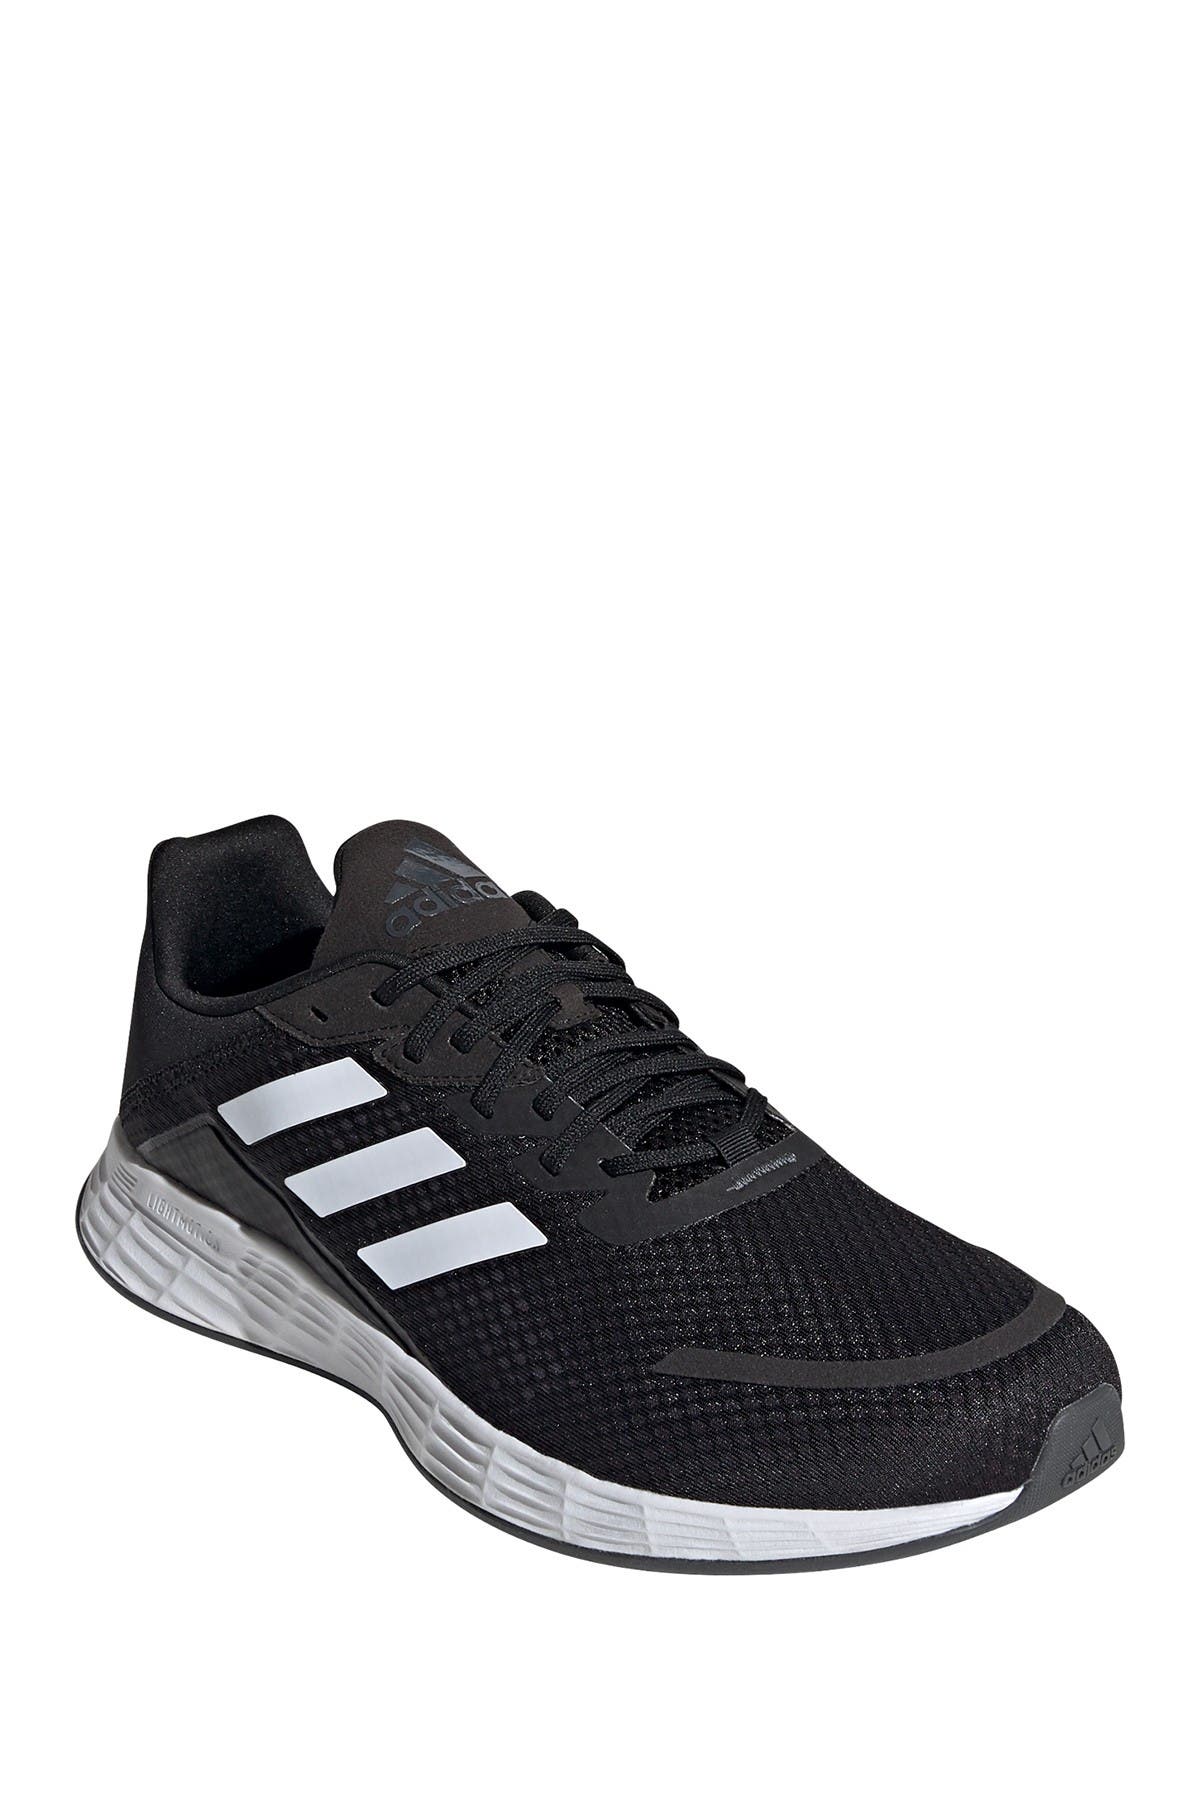 adidas | Duramo SL Running Sneaker 